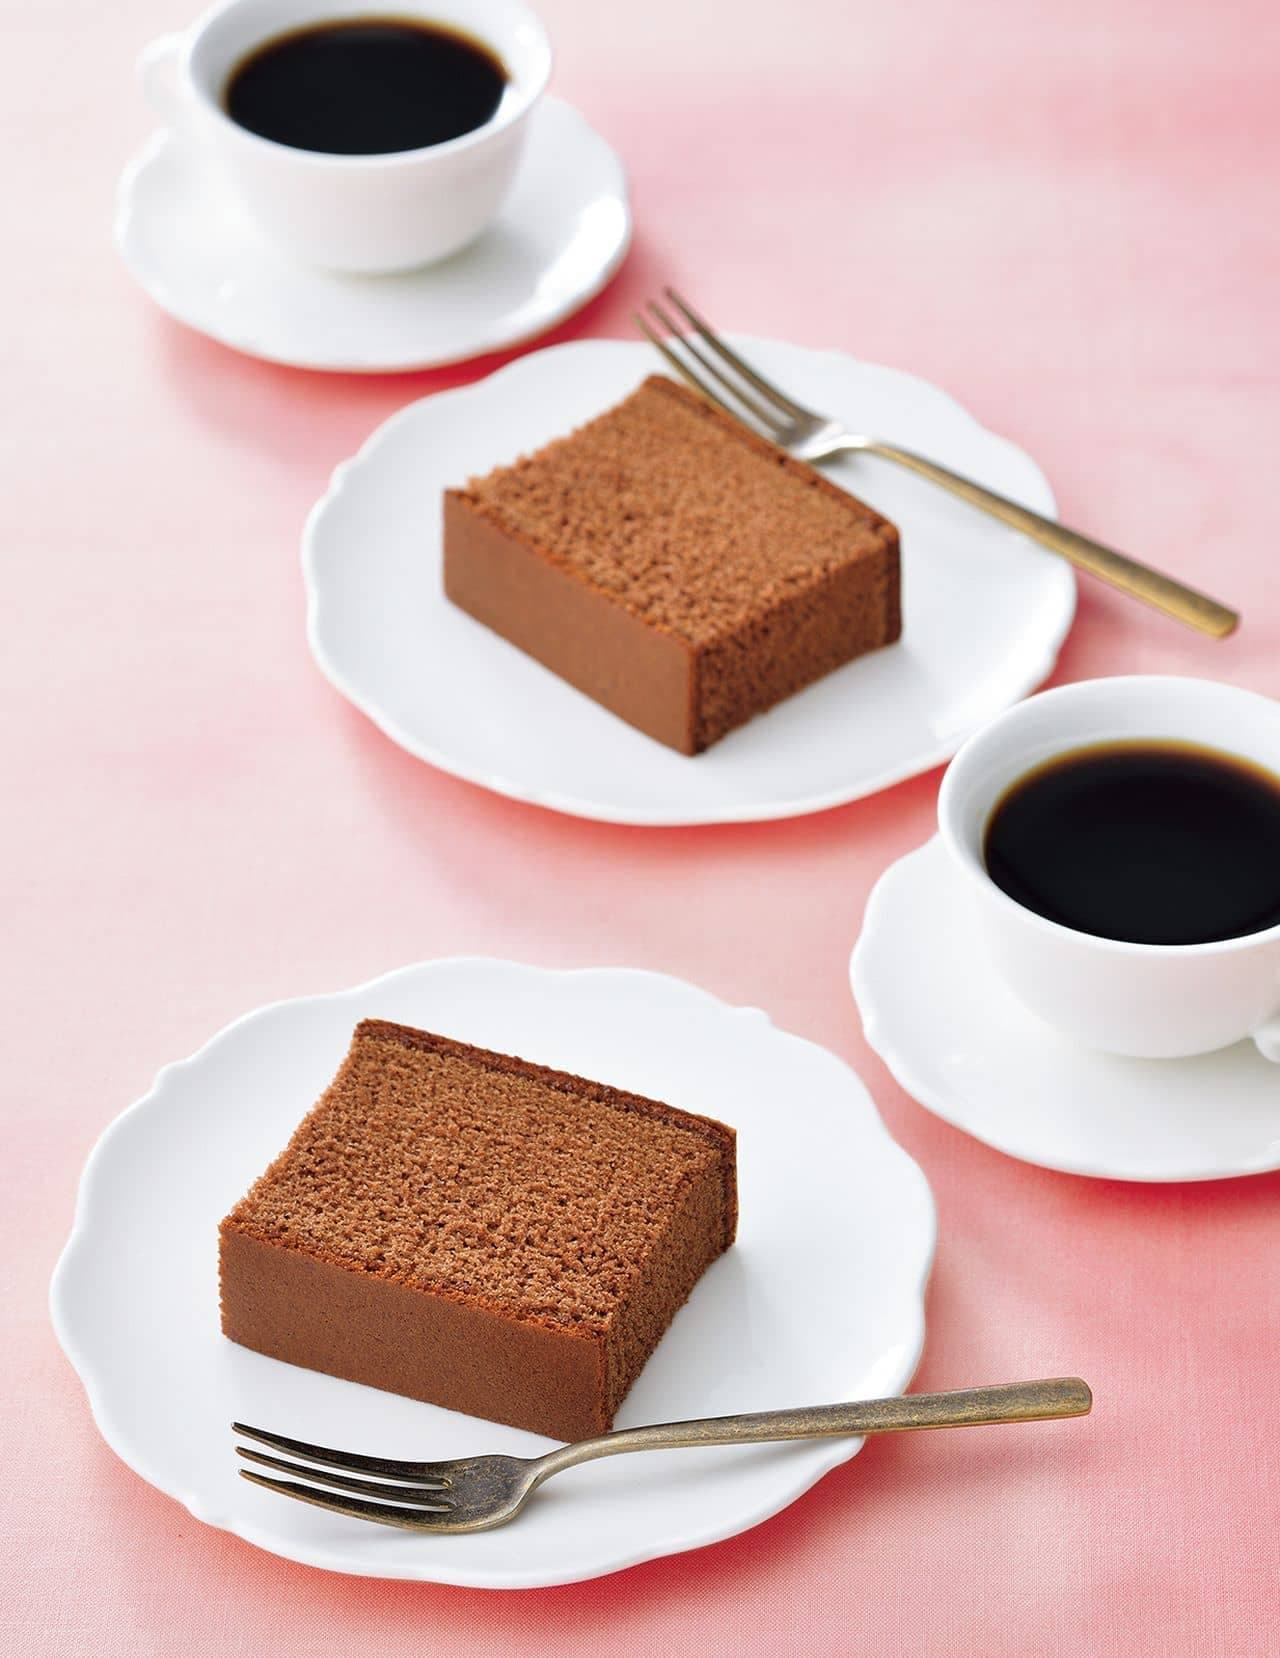 Bunmeido Tokyo "Chocolate sponge cake